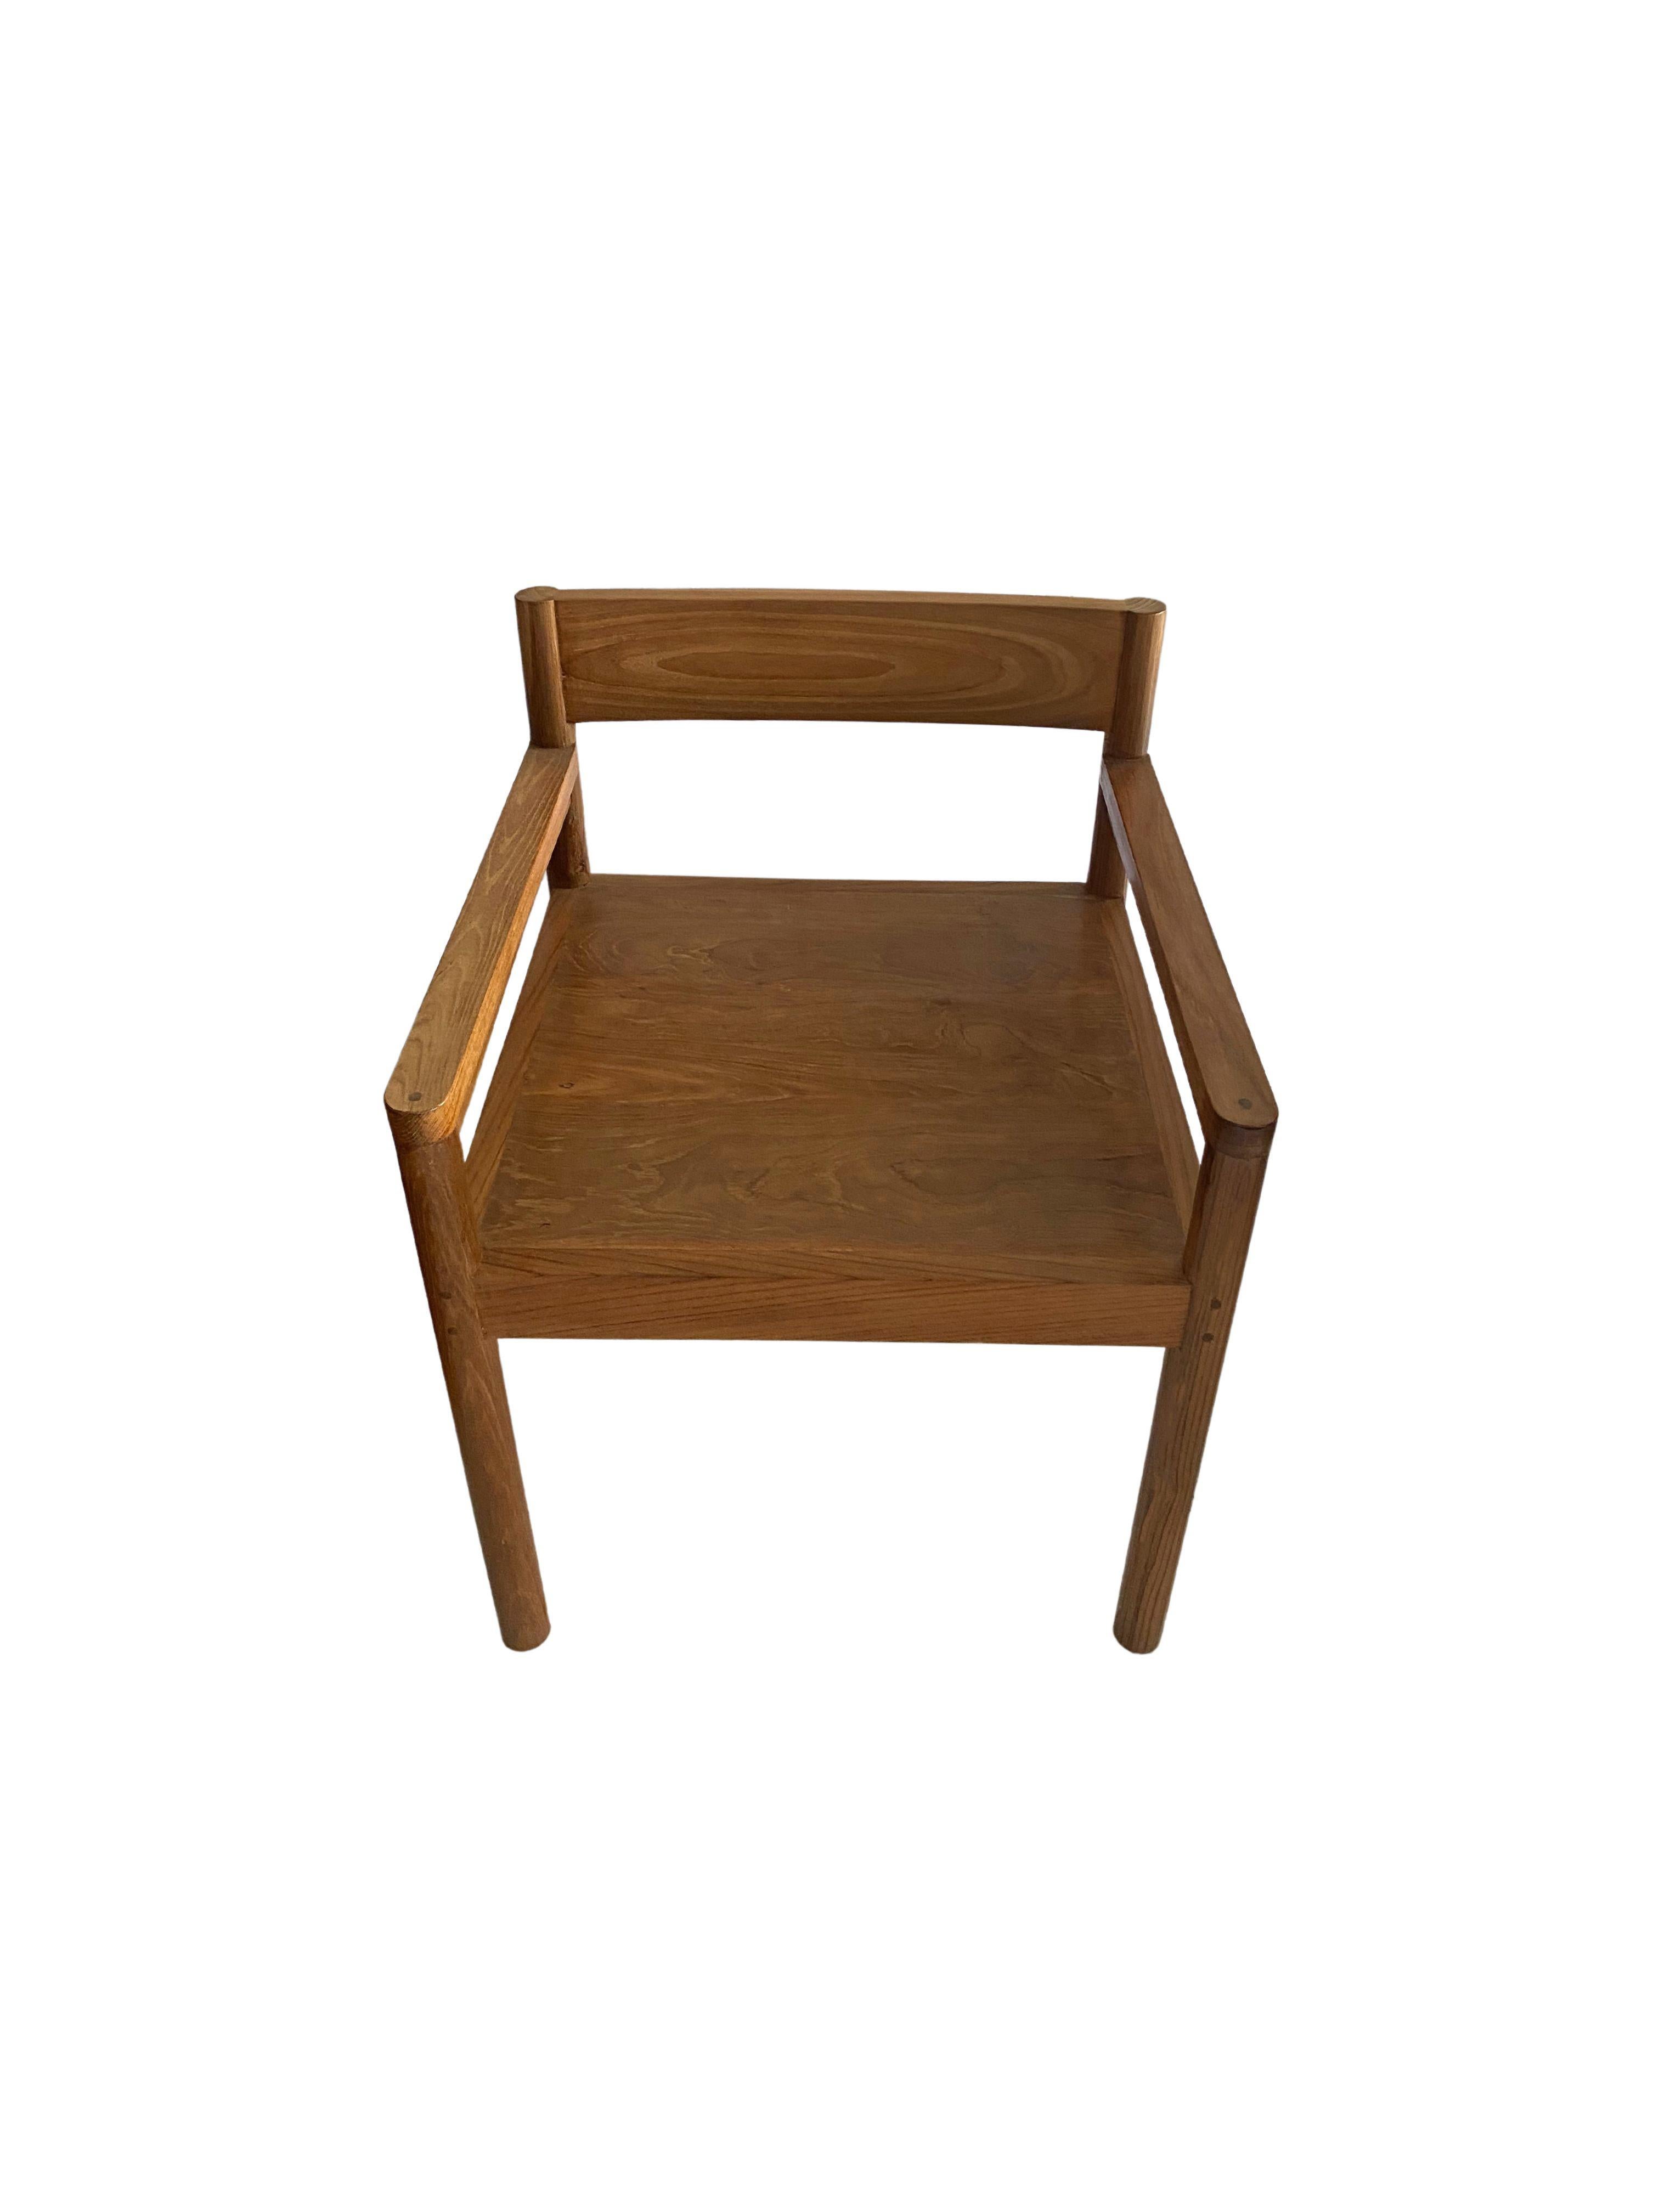 Organic Modern Modern Teak Wood Chair With stunning Wood Pattern Detailing